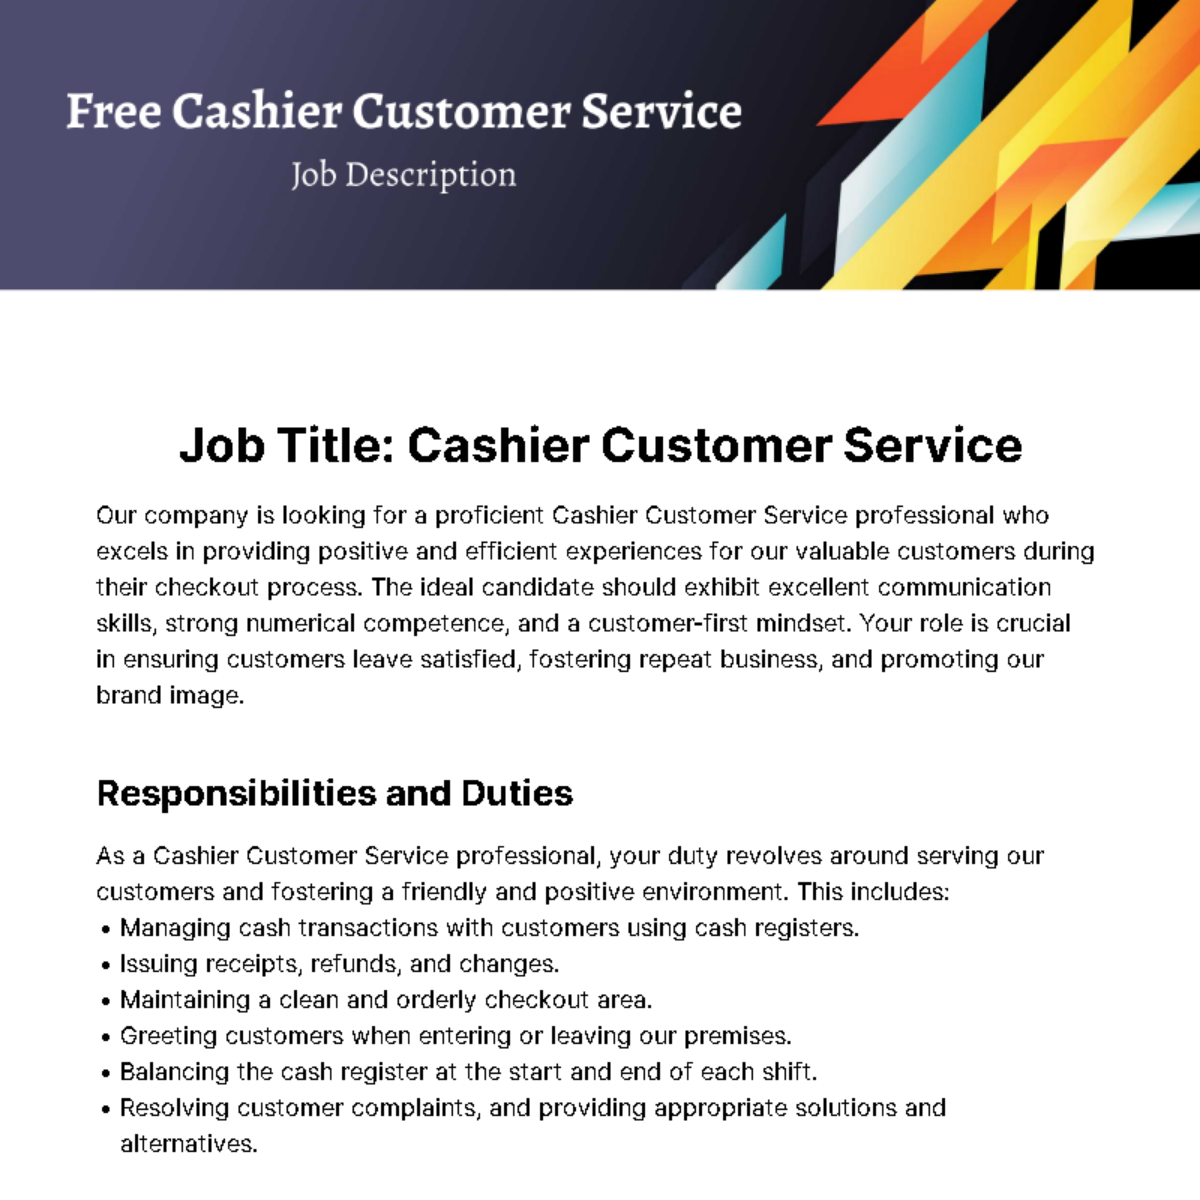 Cashier Customer Service Job Description Template